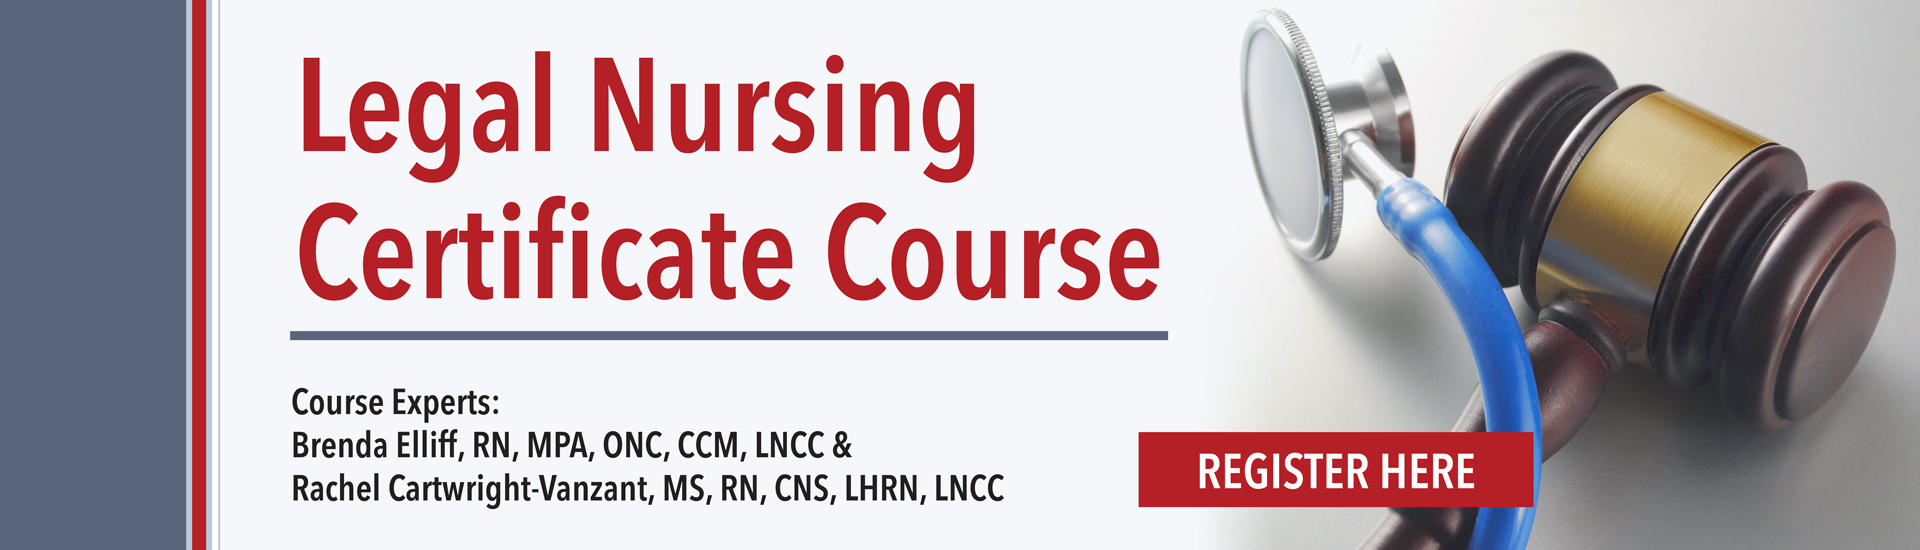 Legal Nursing Certificate Course